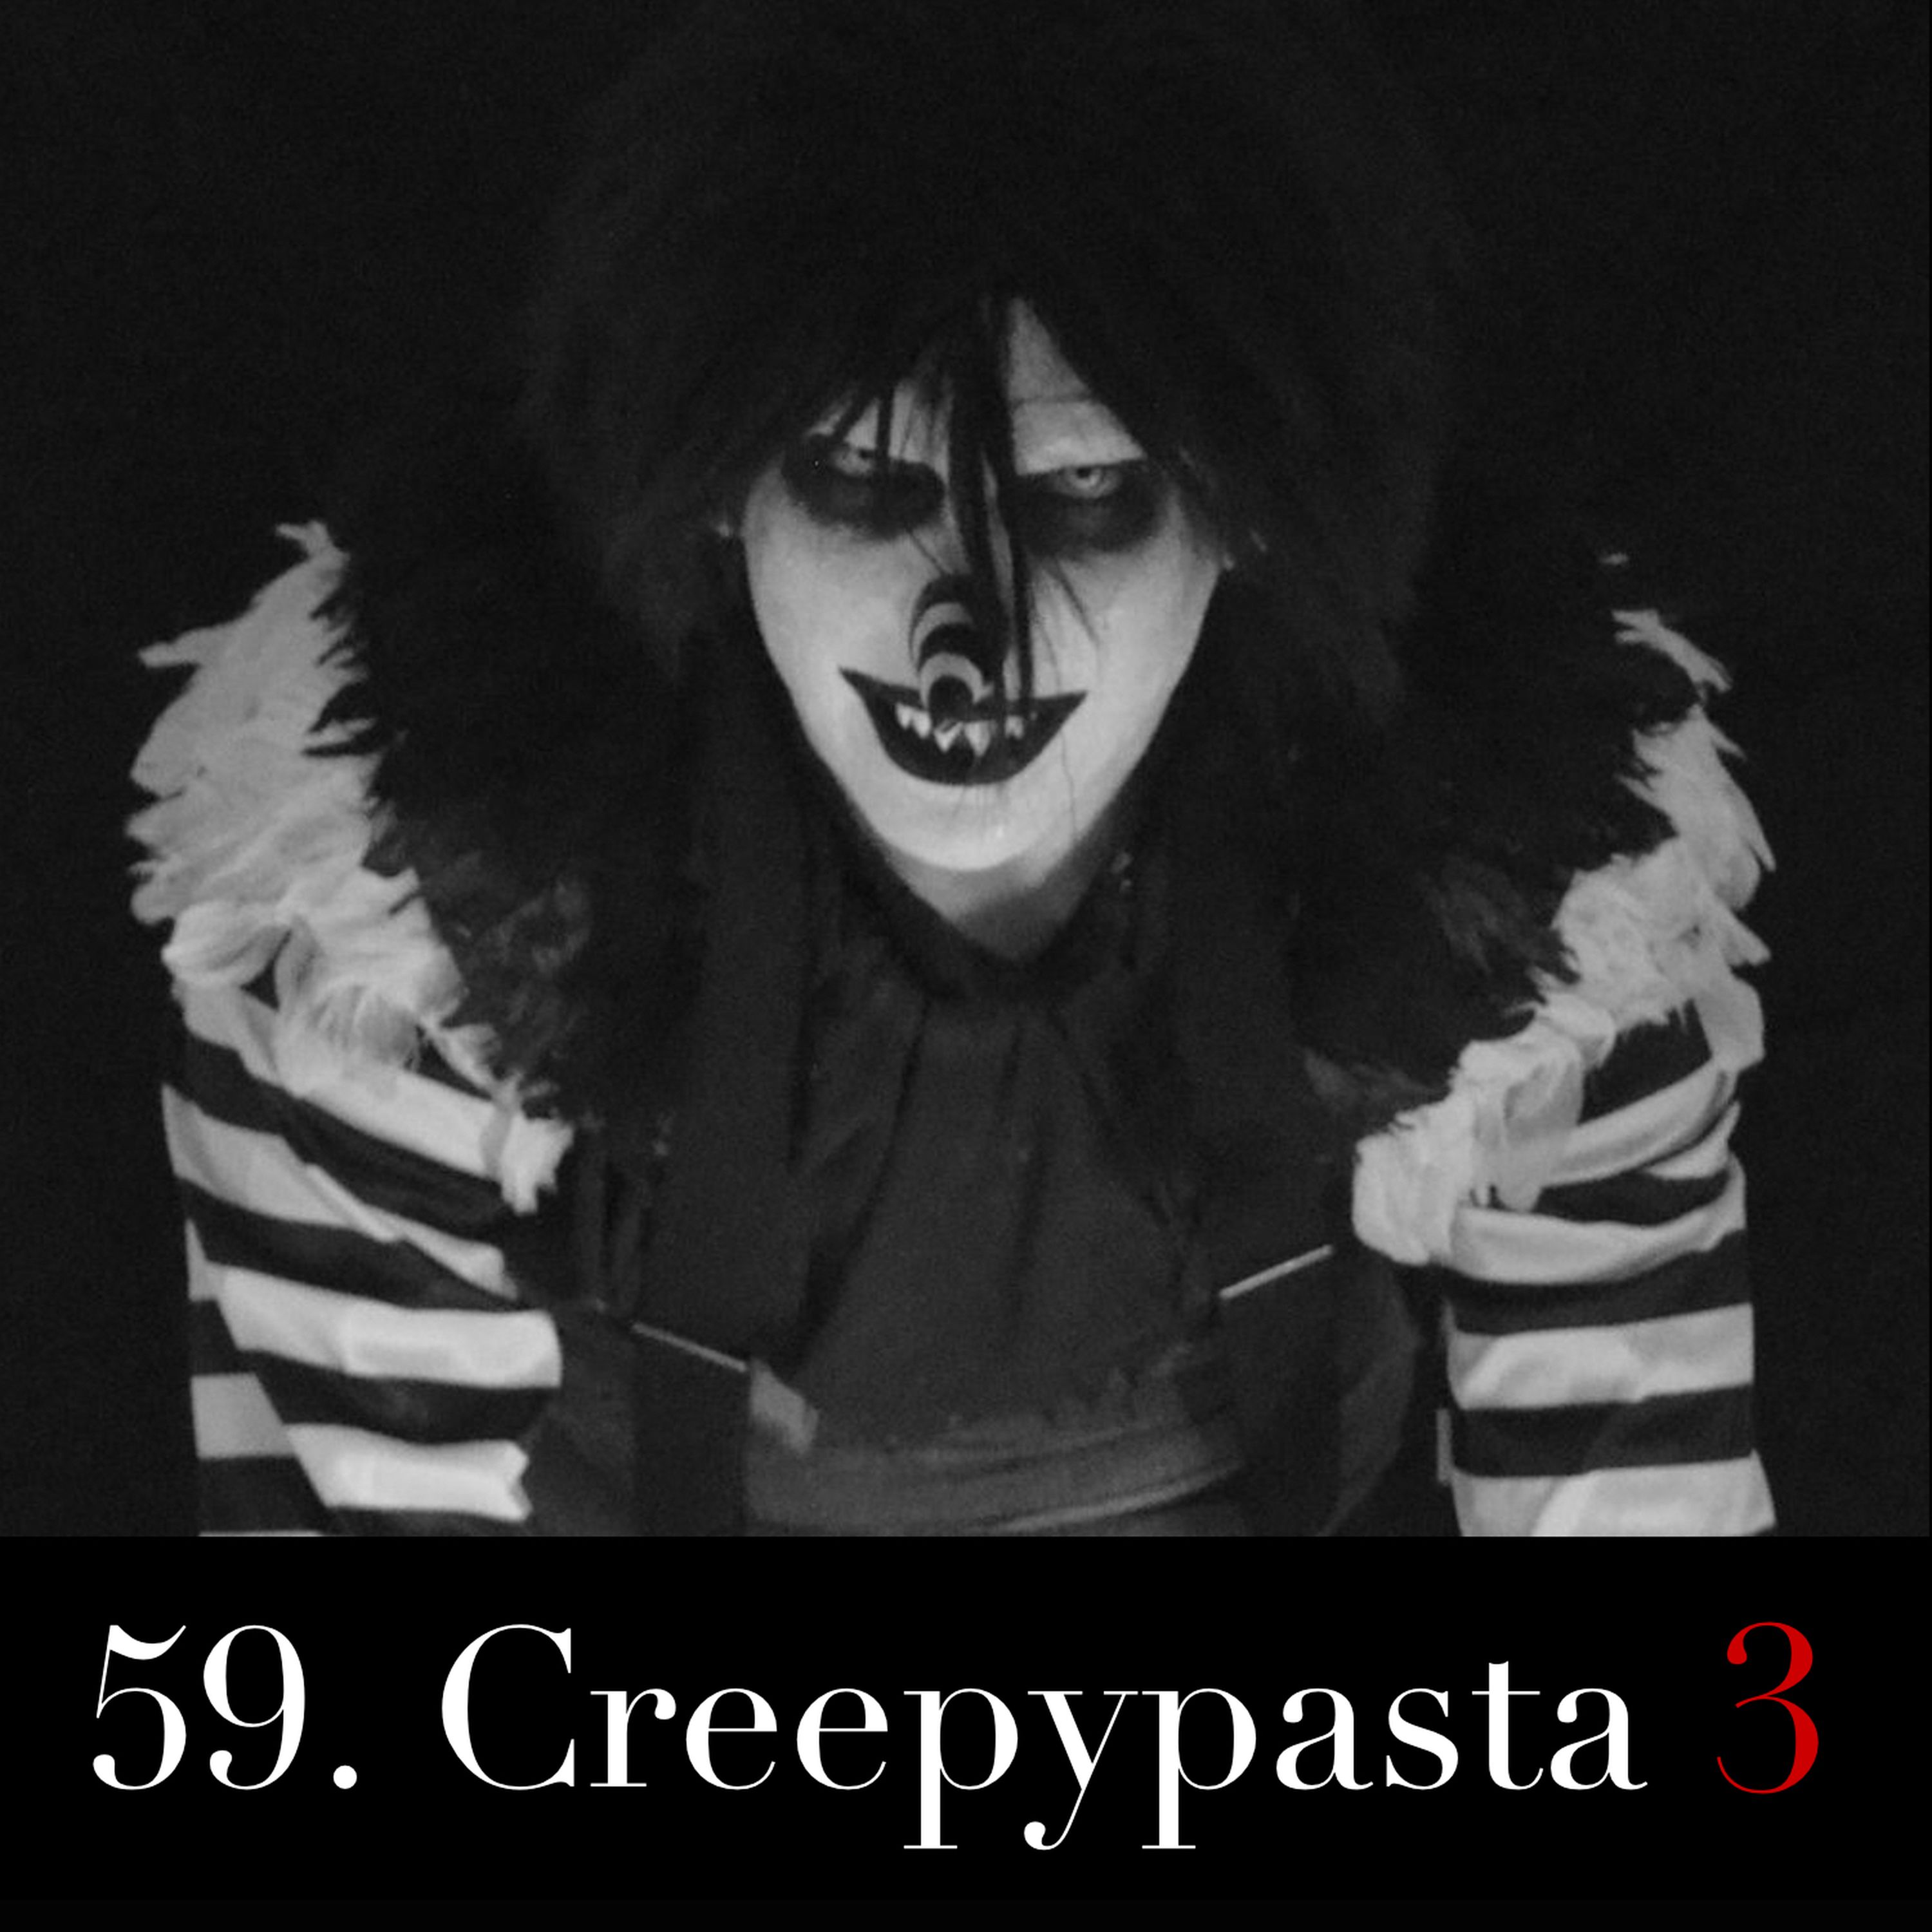 59. Creepypasta 3